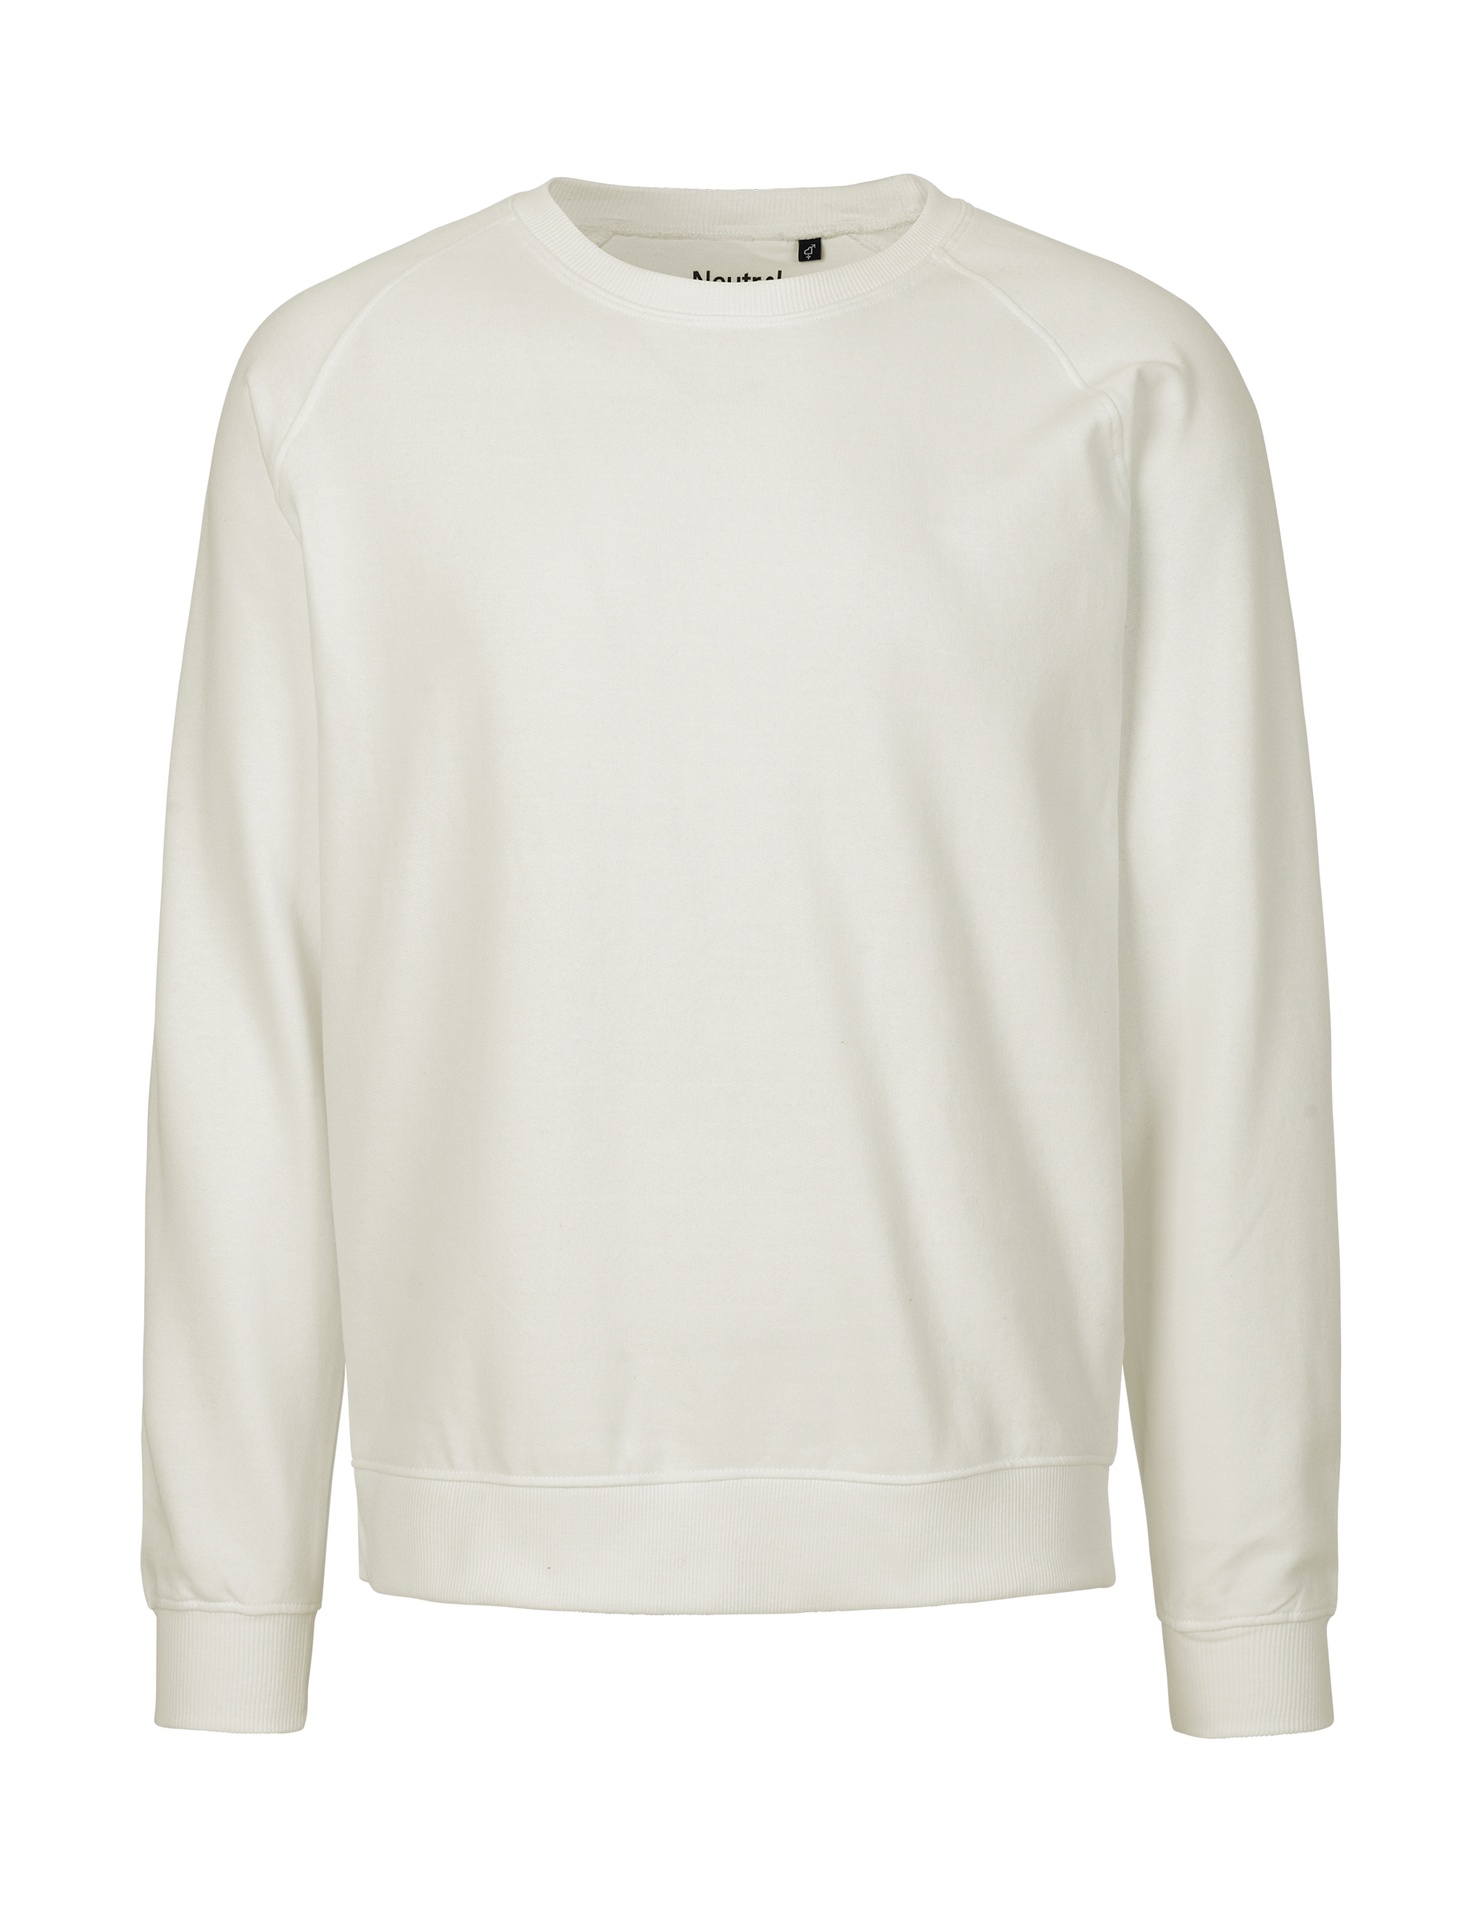 [PR/02644] Unisex Sweatshirt (Nature 00, S)